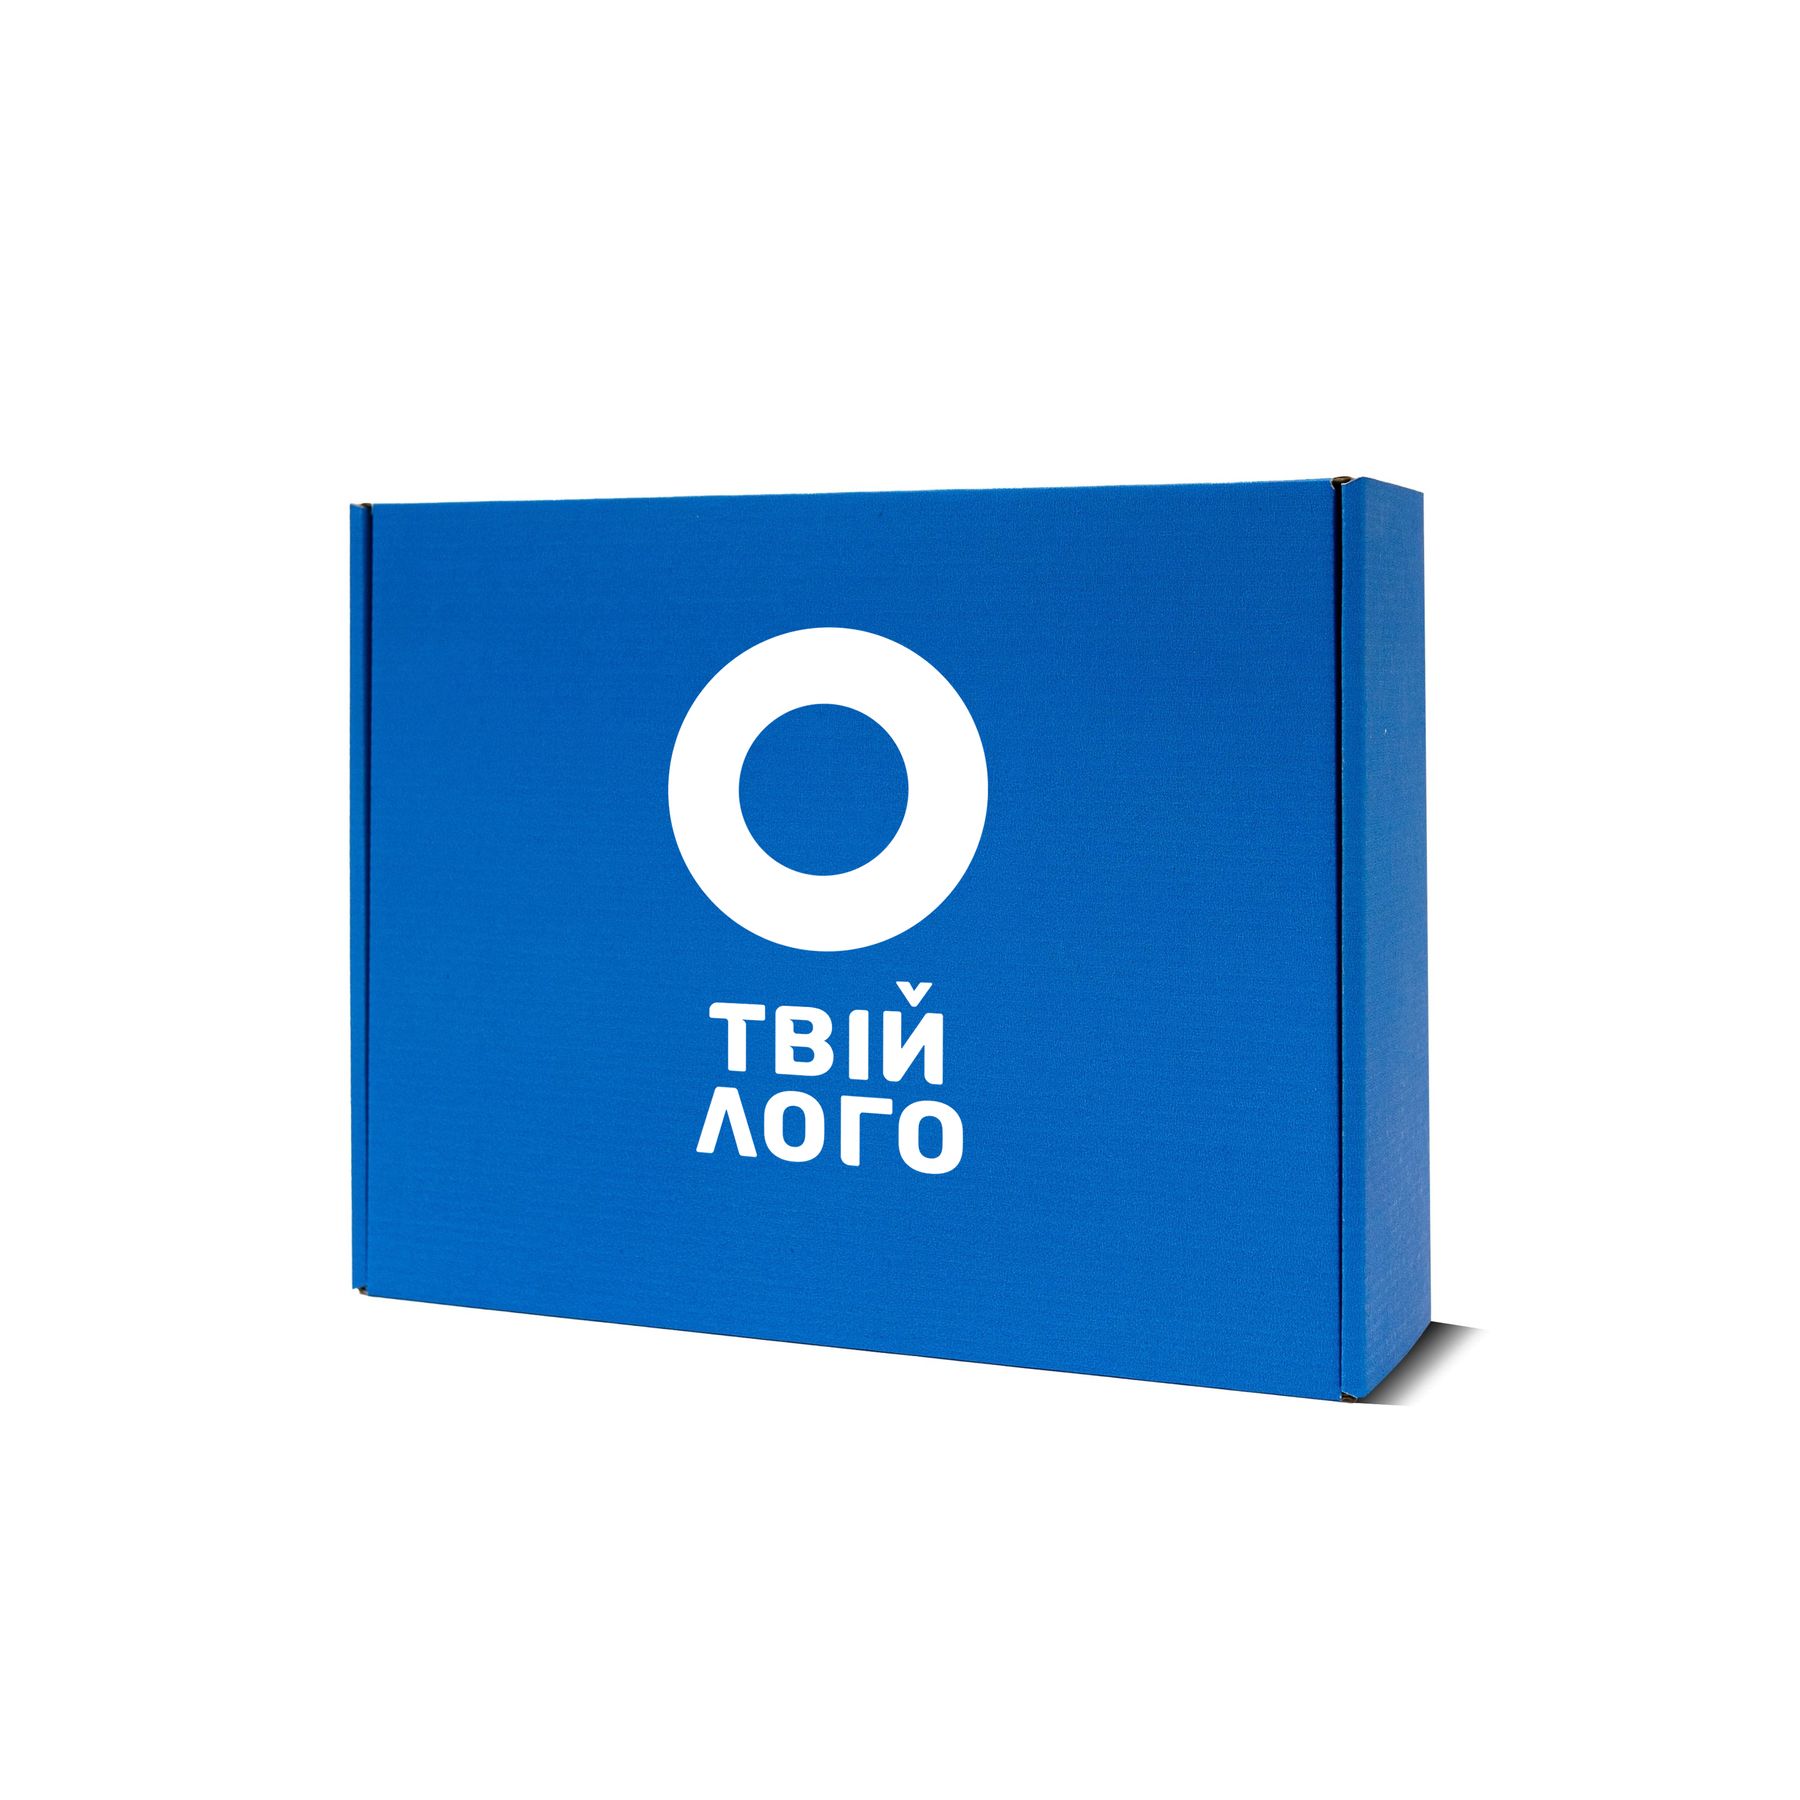 Blue cardboard gift box with logo - 30-24-9